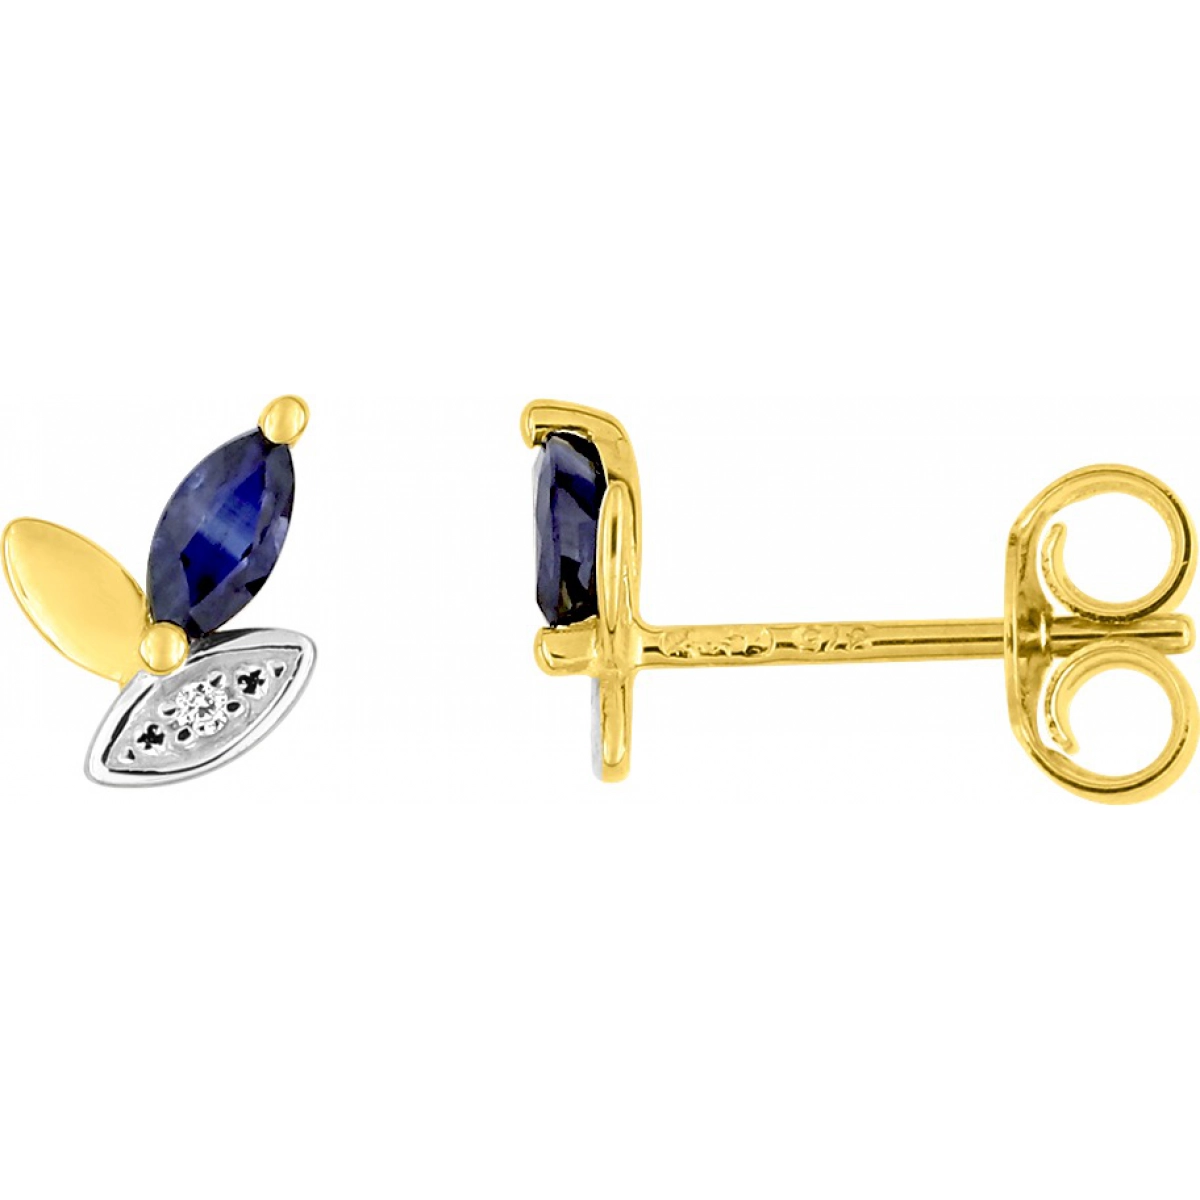 Earrings pair w. sapphire and cz rhod 18K YG  Lua Blanca  2.7143.S3.0